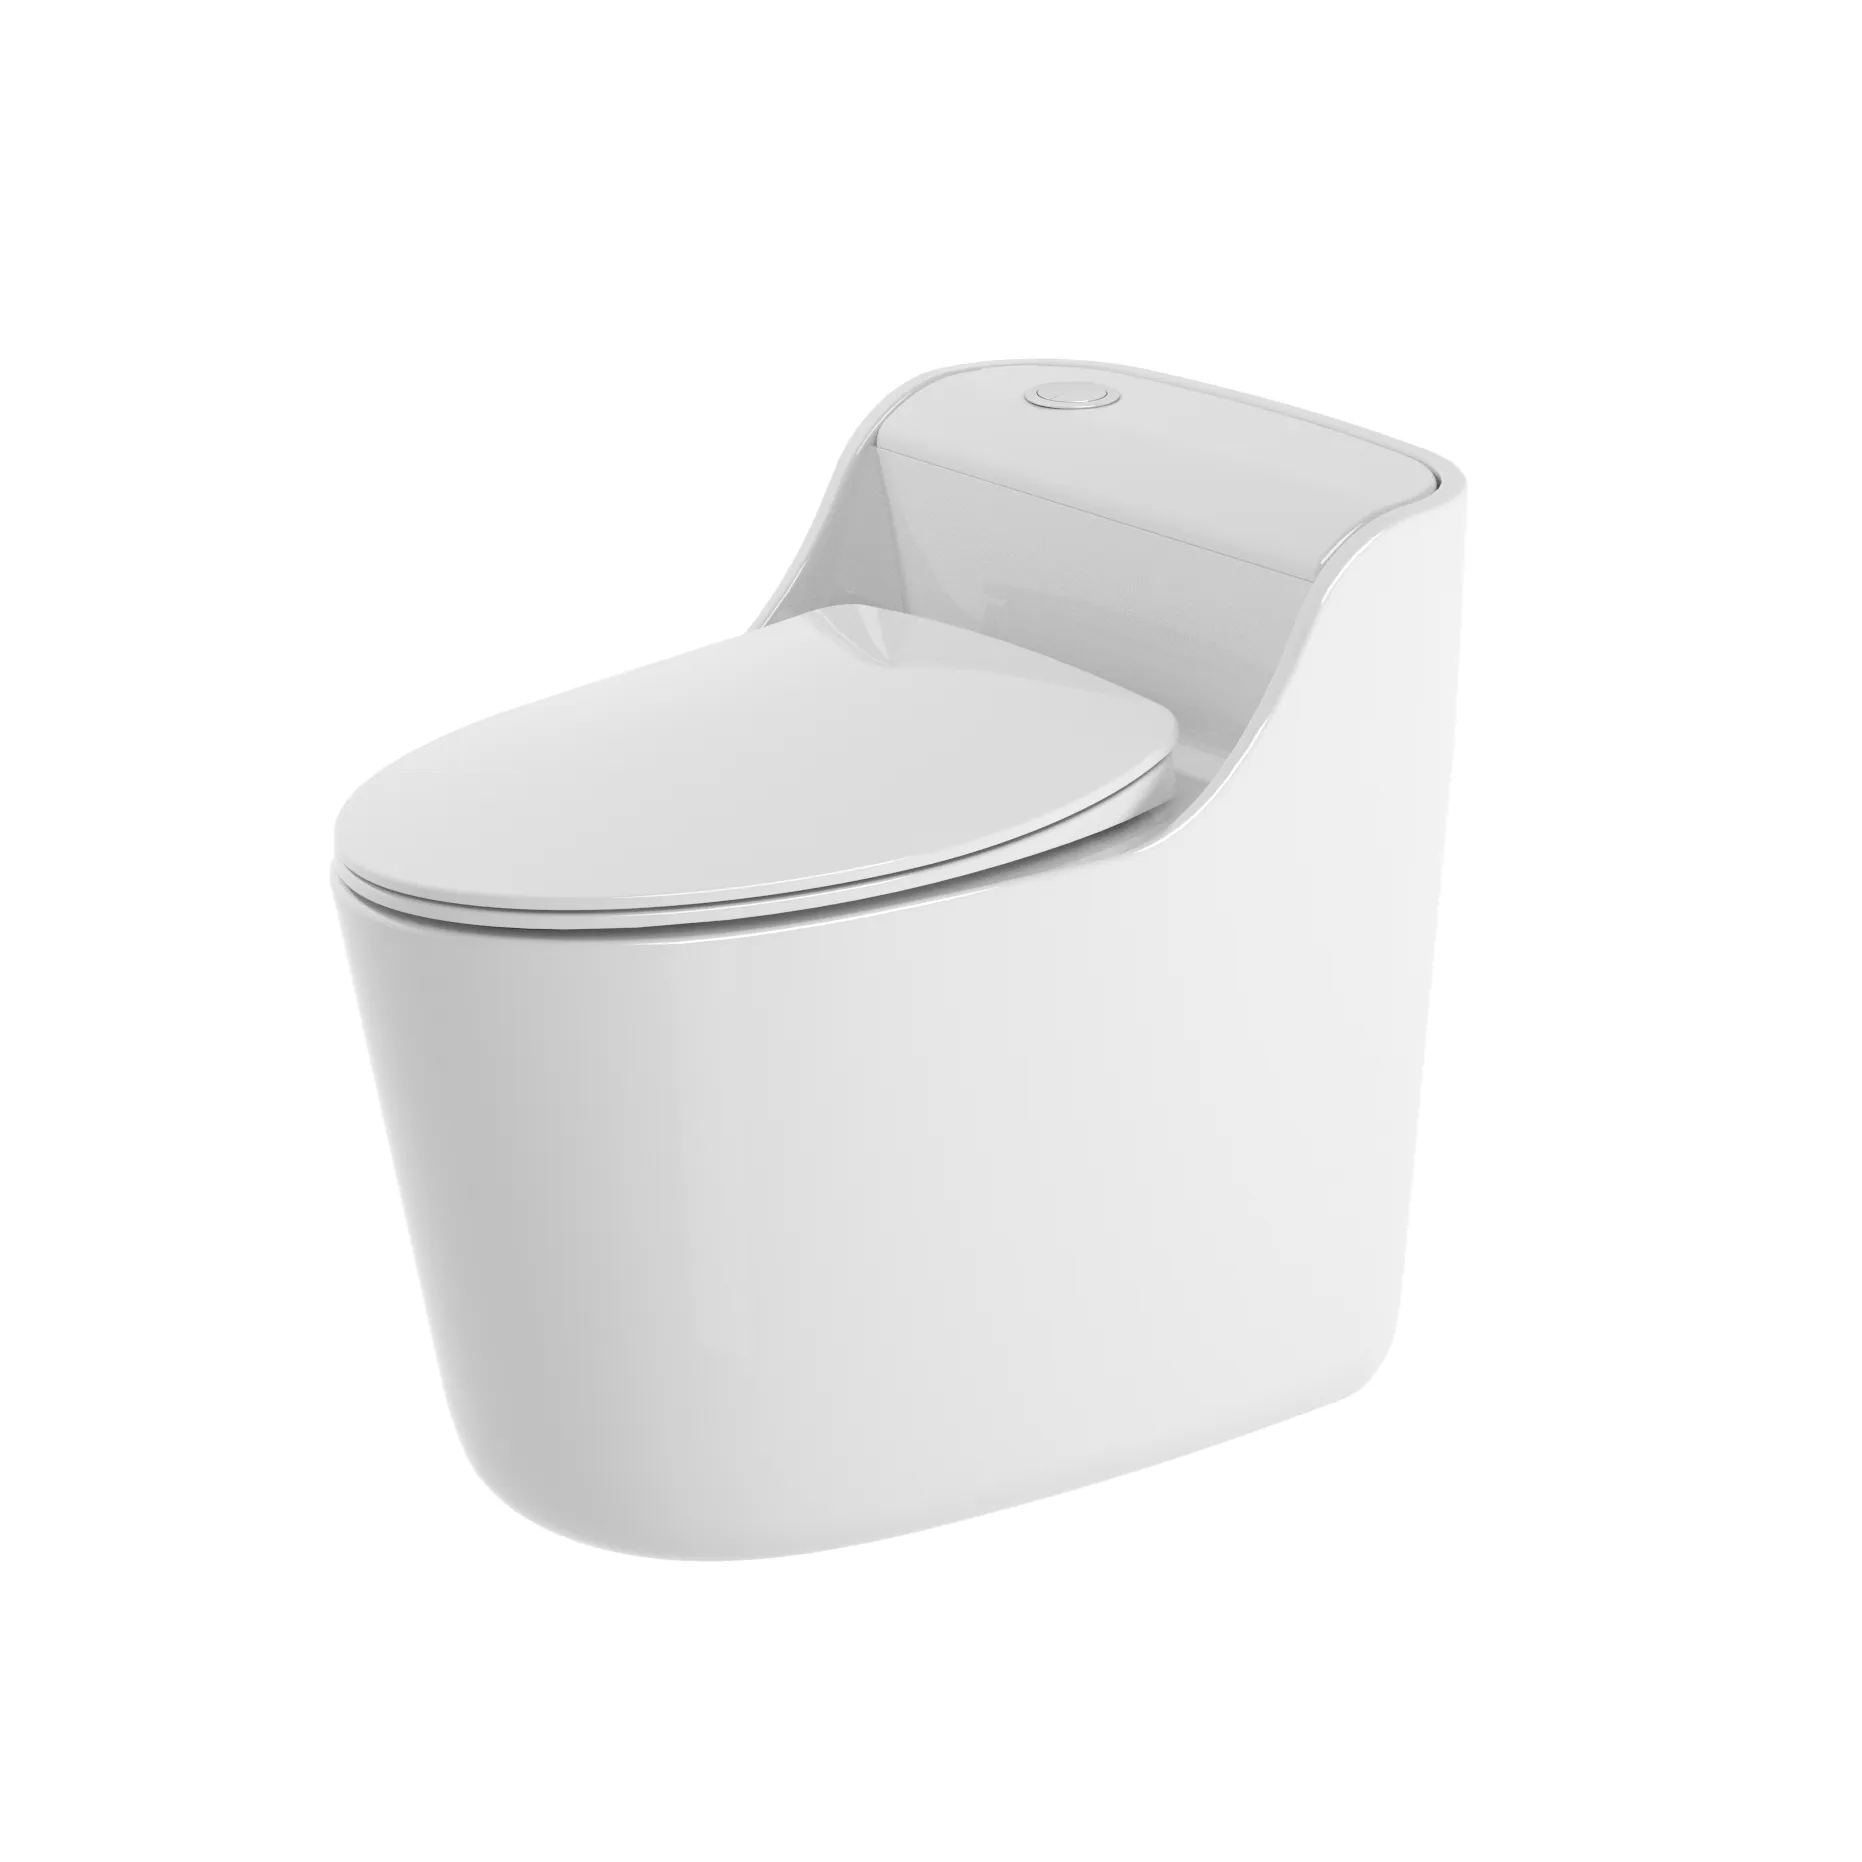 सैनिटरी वेयर बाथरूम wc सिरेमिक एक टुकड़ा शौचालय रिमोट कंट्रोल के साथ स्मार्ट शौचालय